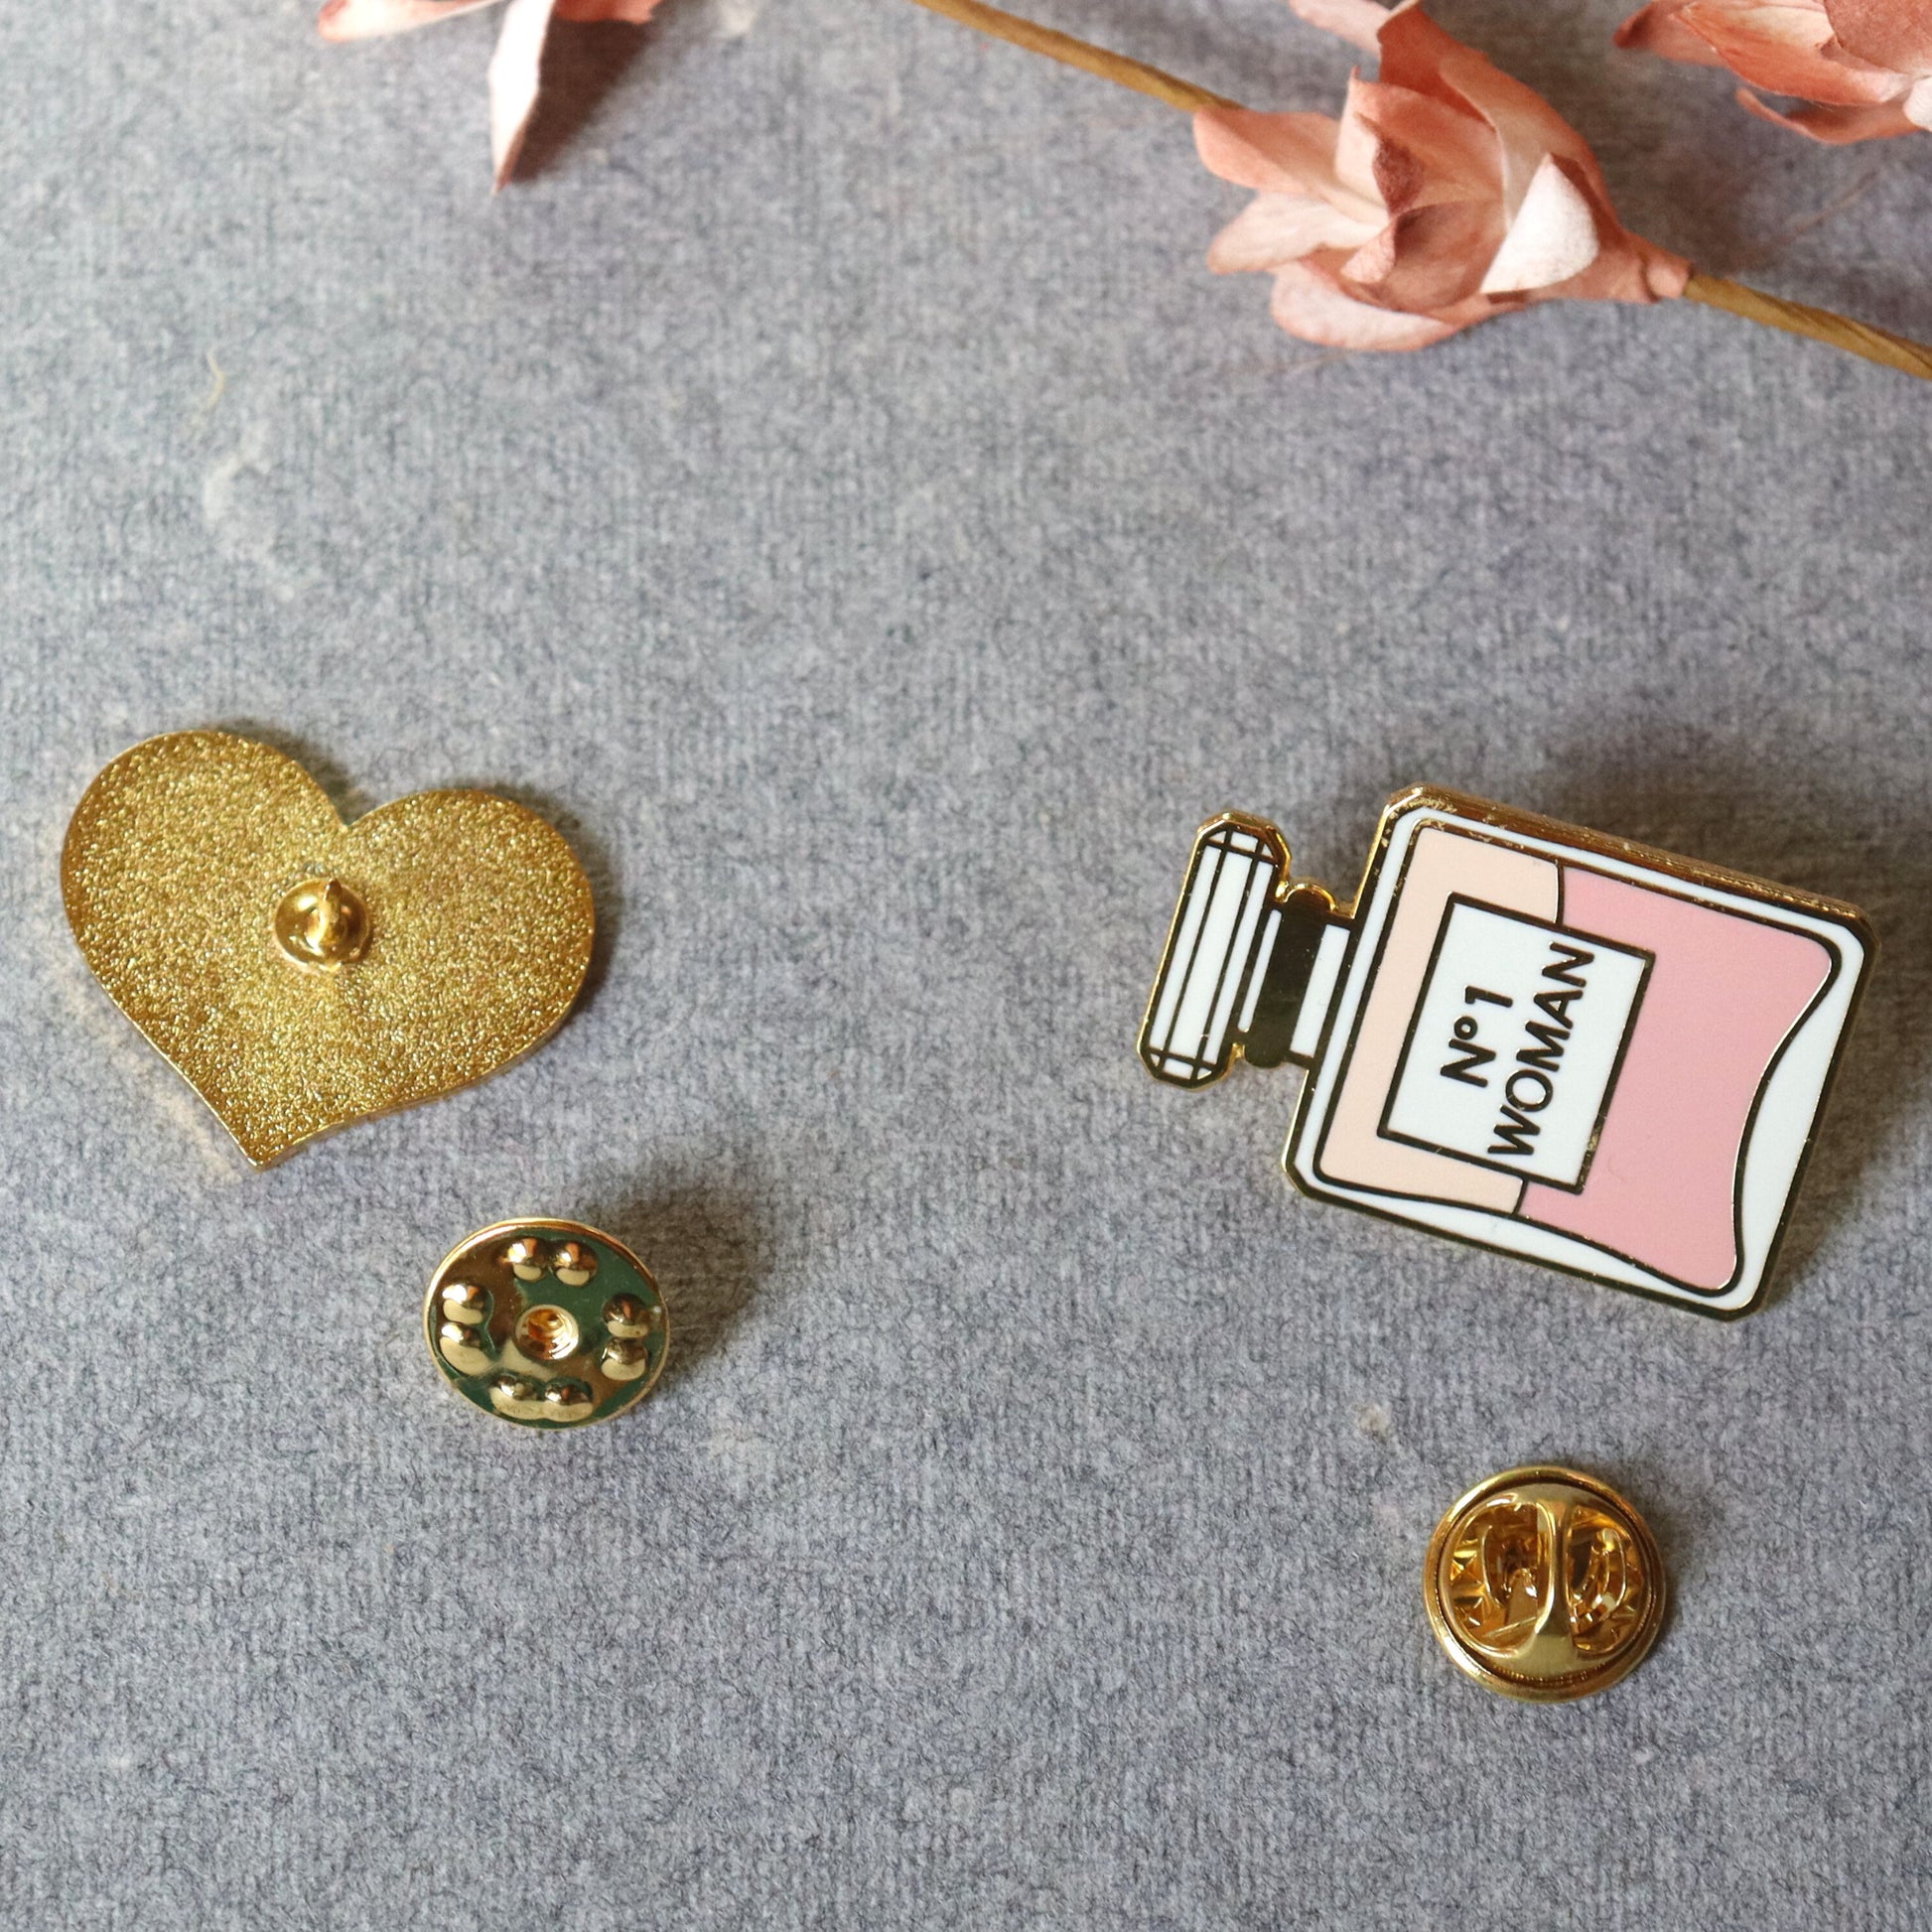 No. 1 Woman Perfume Pink Enamel Brooch - Girl Jewelry, Designer Lapel, Pin, Badge - Aksa Home Decor 